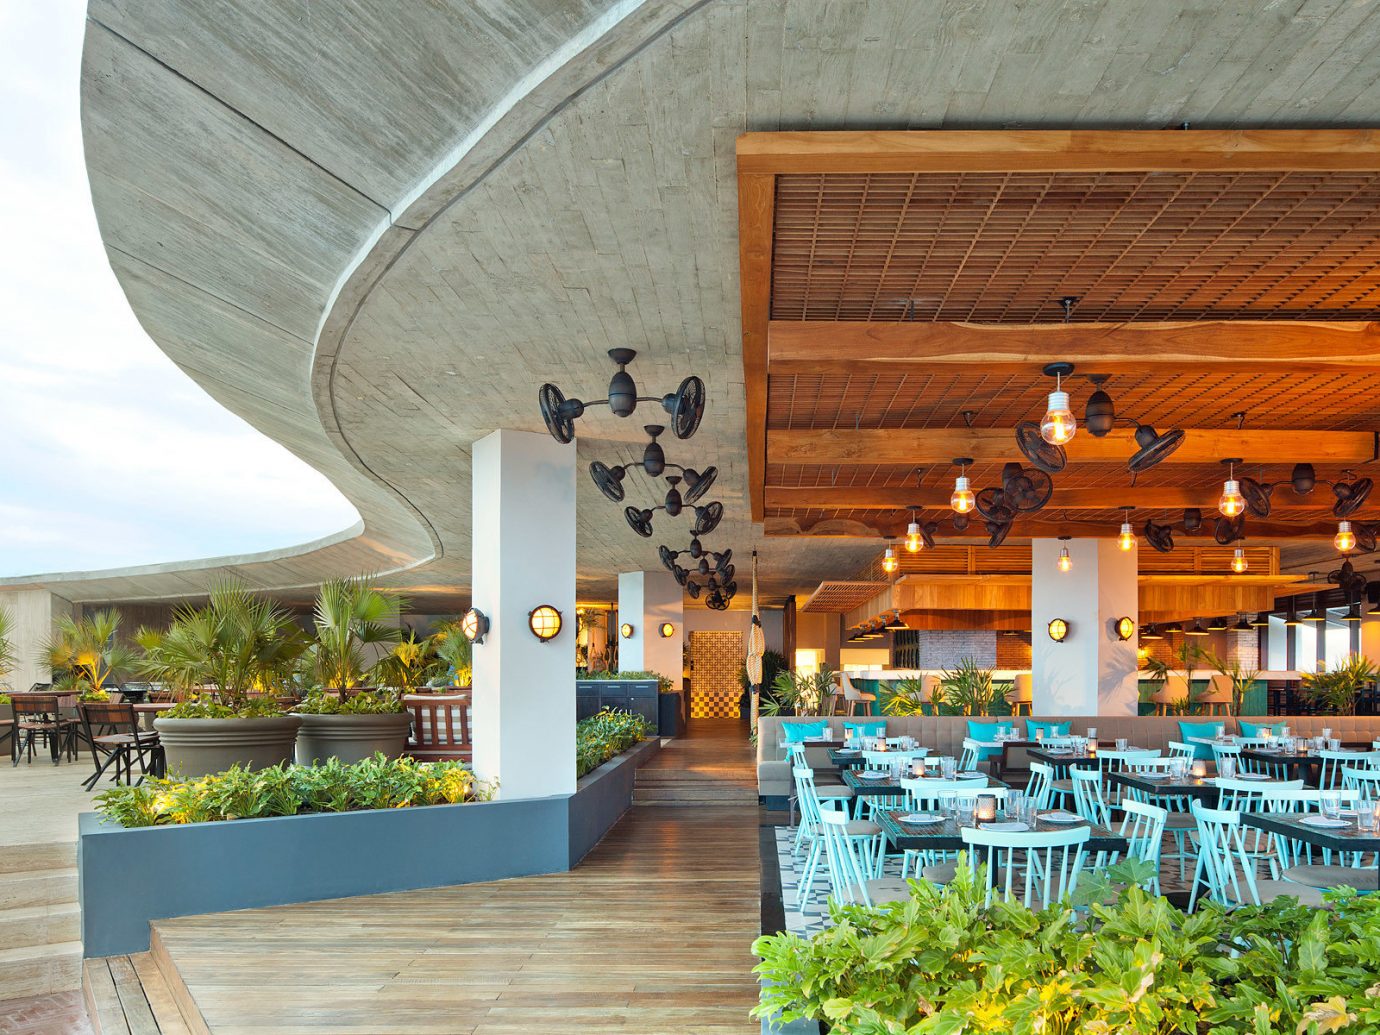 All-Inclusive Resorts Hotels Trip Ideas building Architecture estate plaza wood furniture